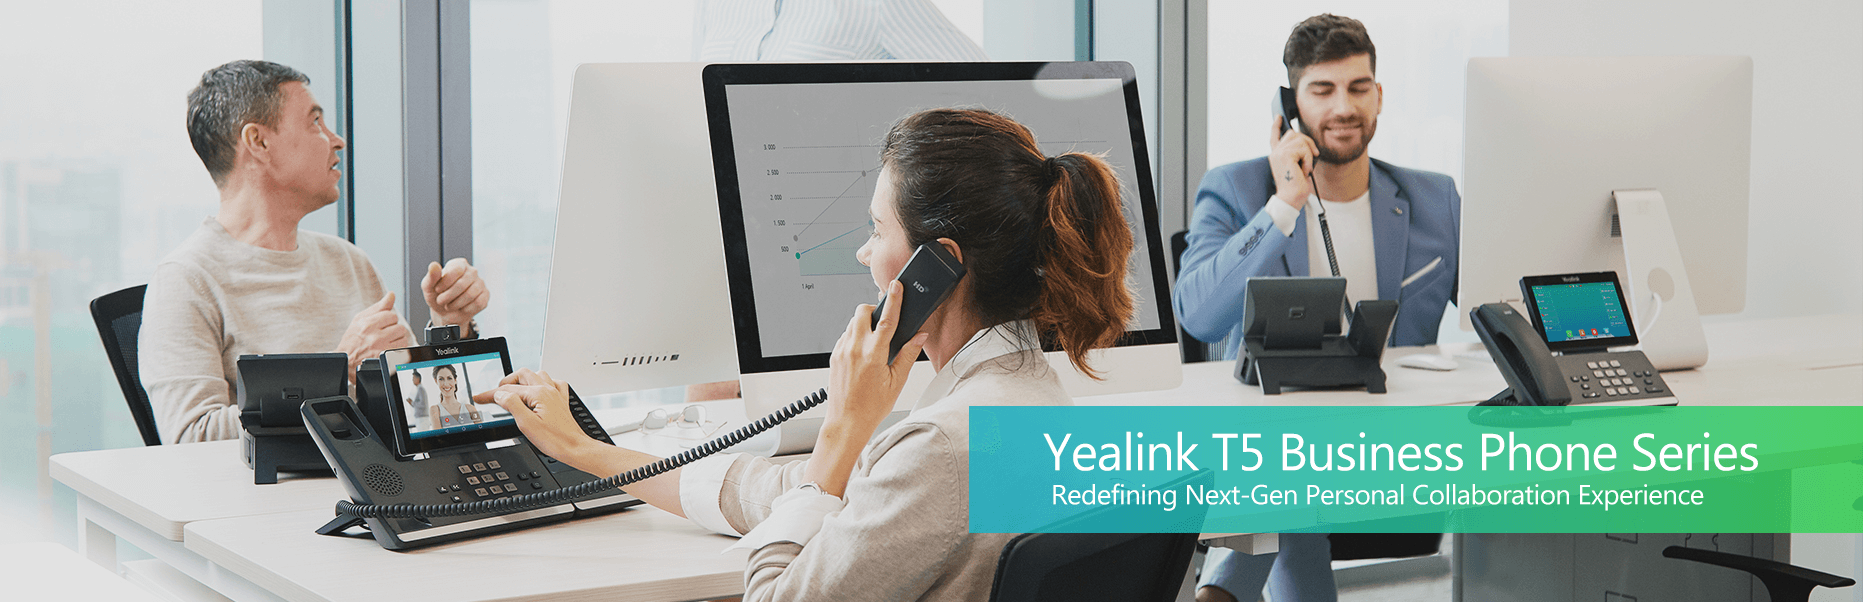 yealink t5 business phone series